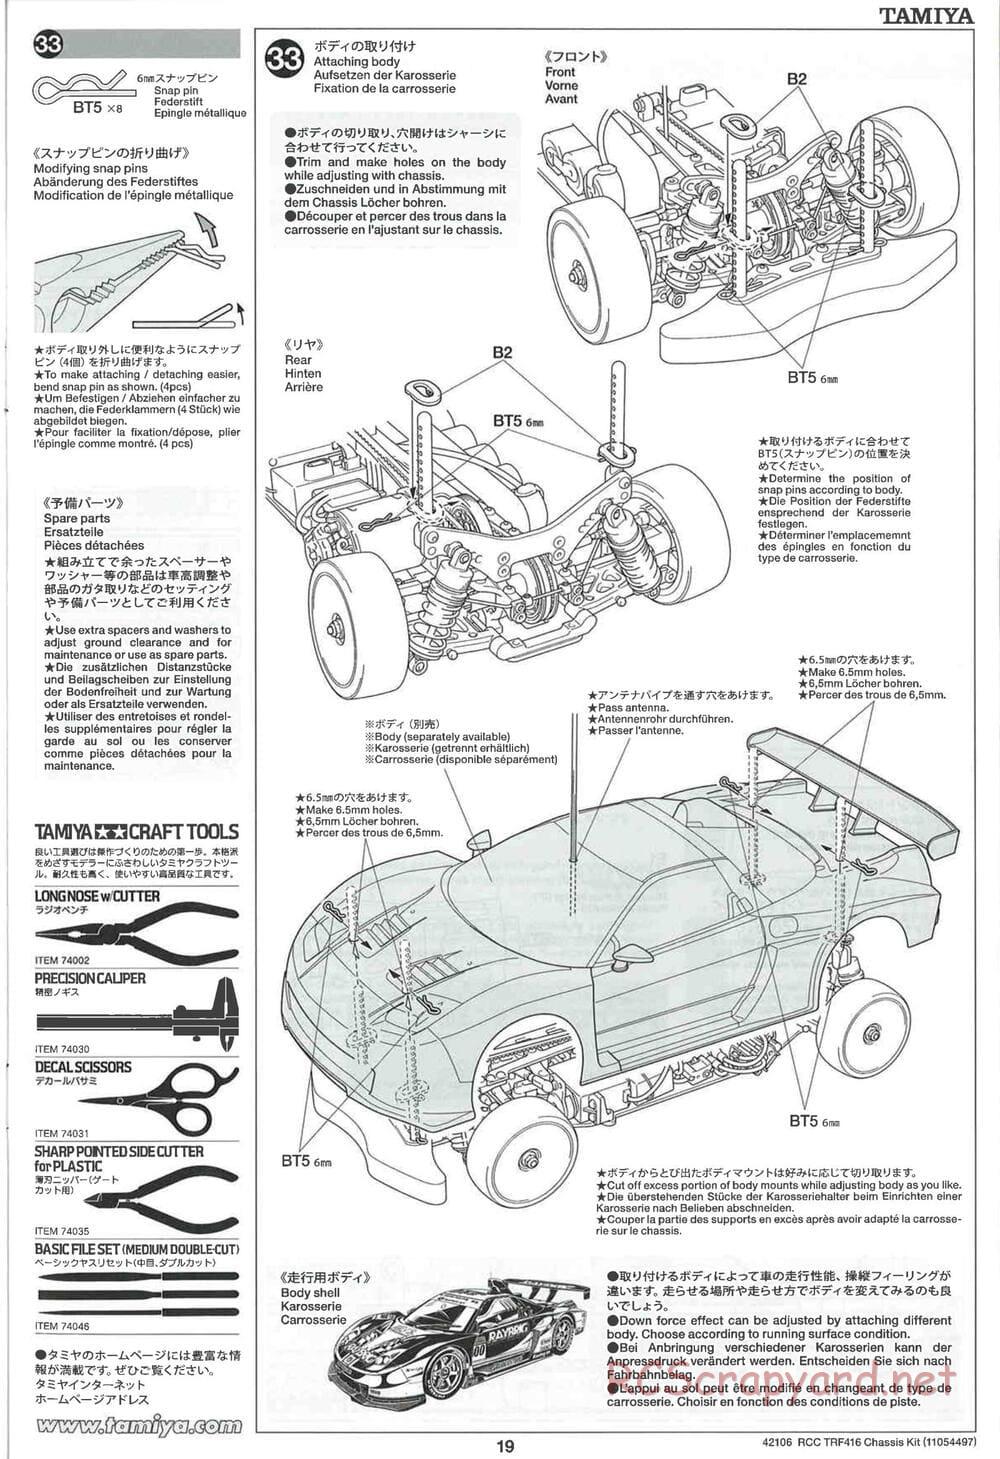 Tamiya - TRF416 Chassis - Manual - Page 19